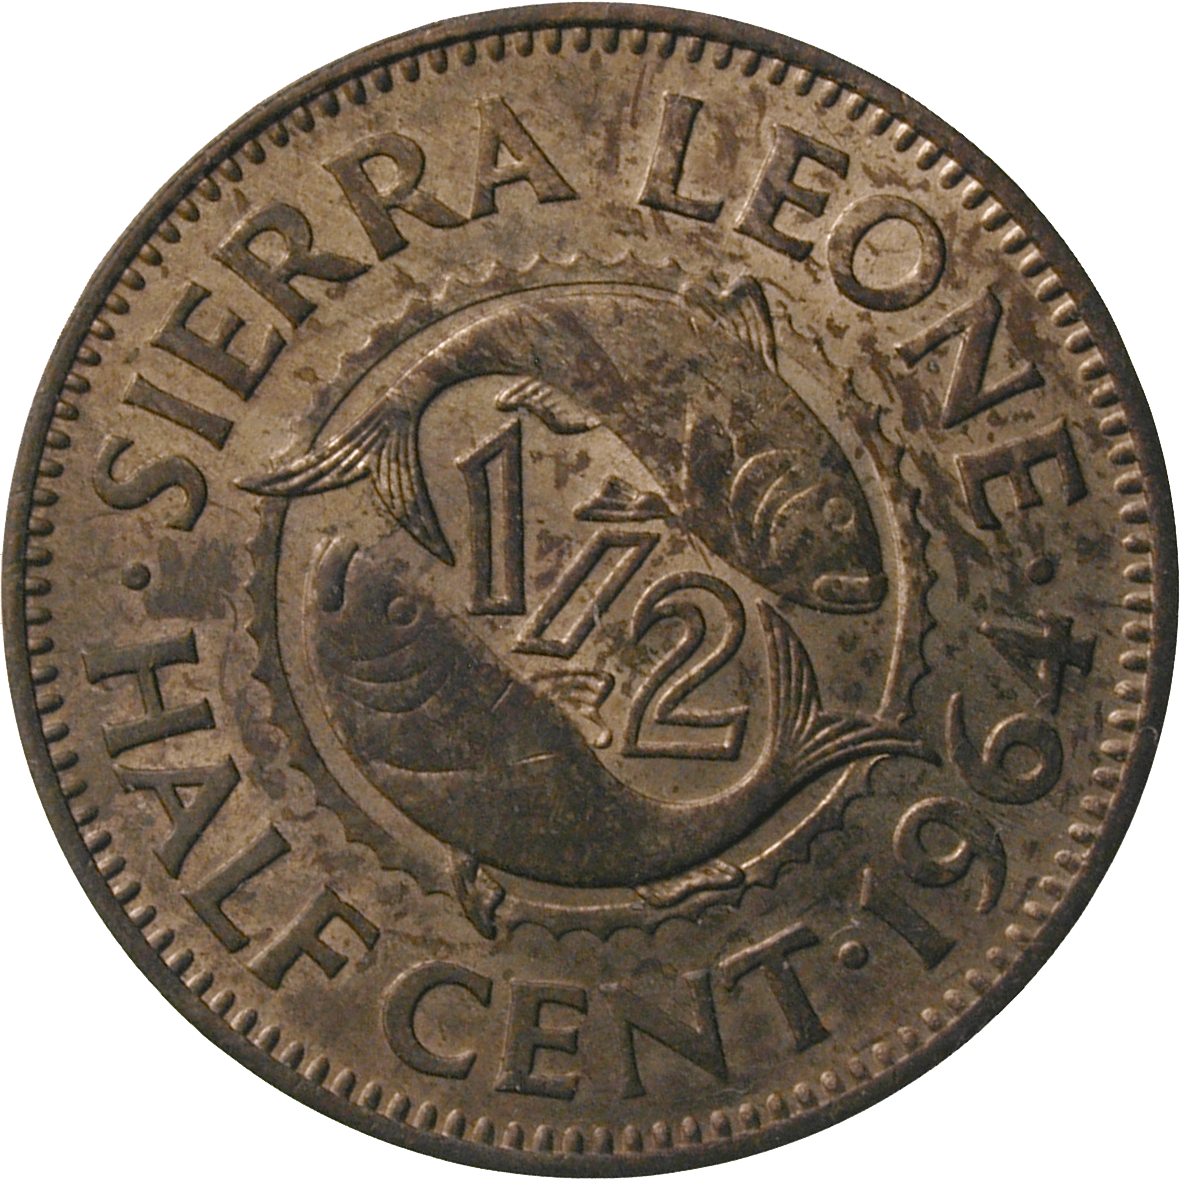 Republik Sierra Leone, Halber Cent 1964 (reverse)